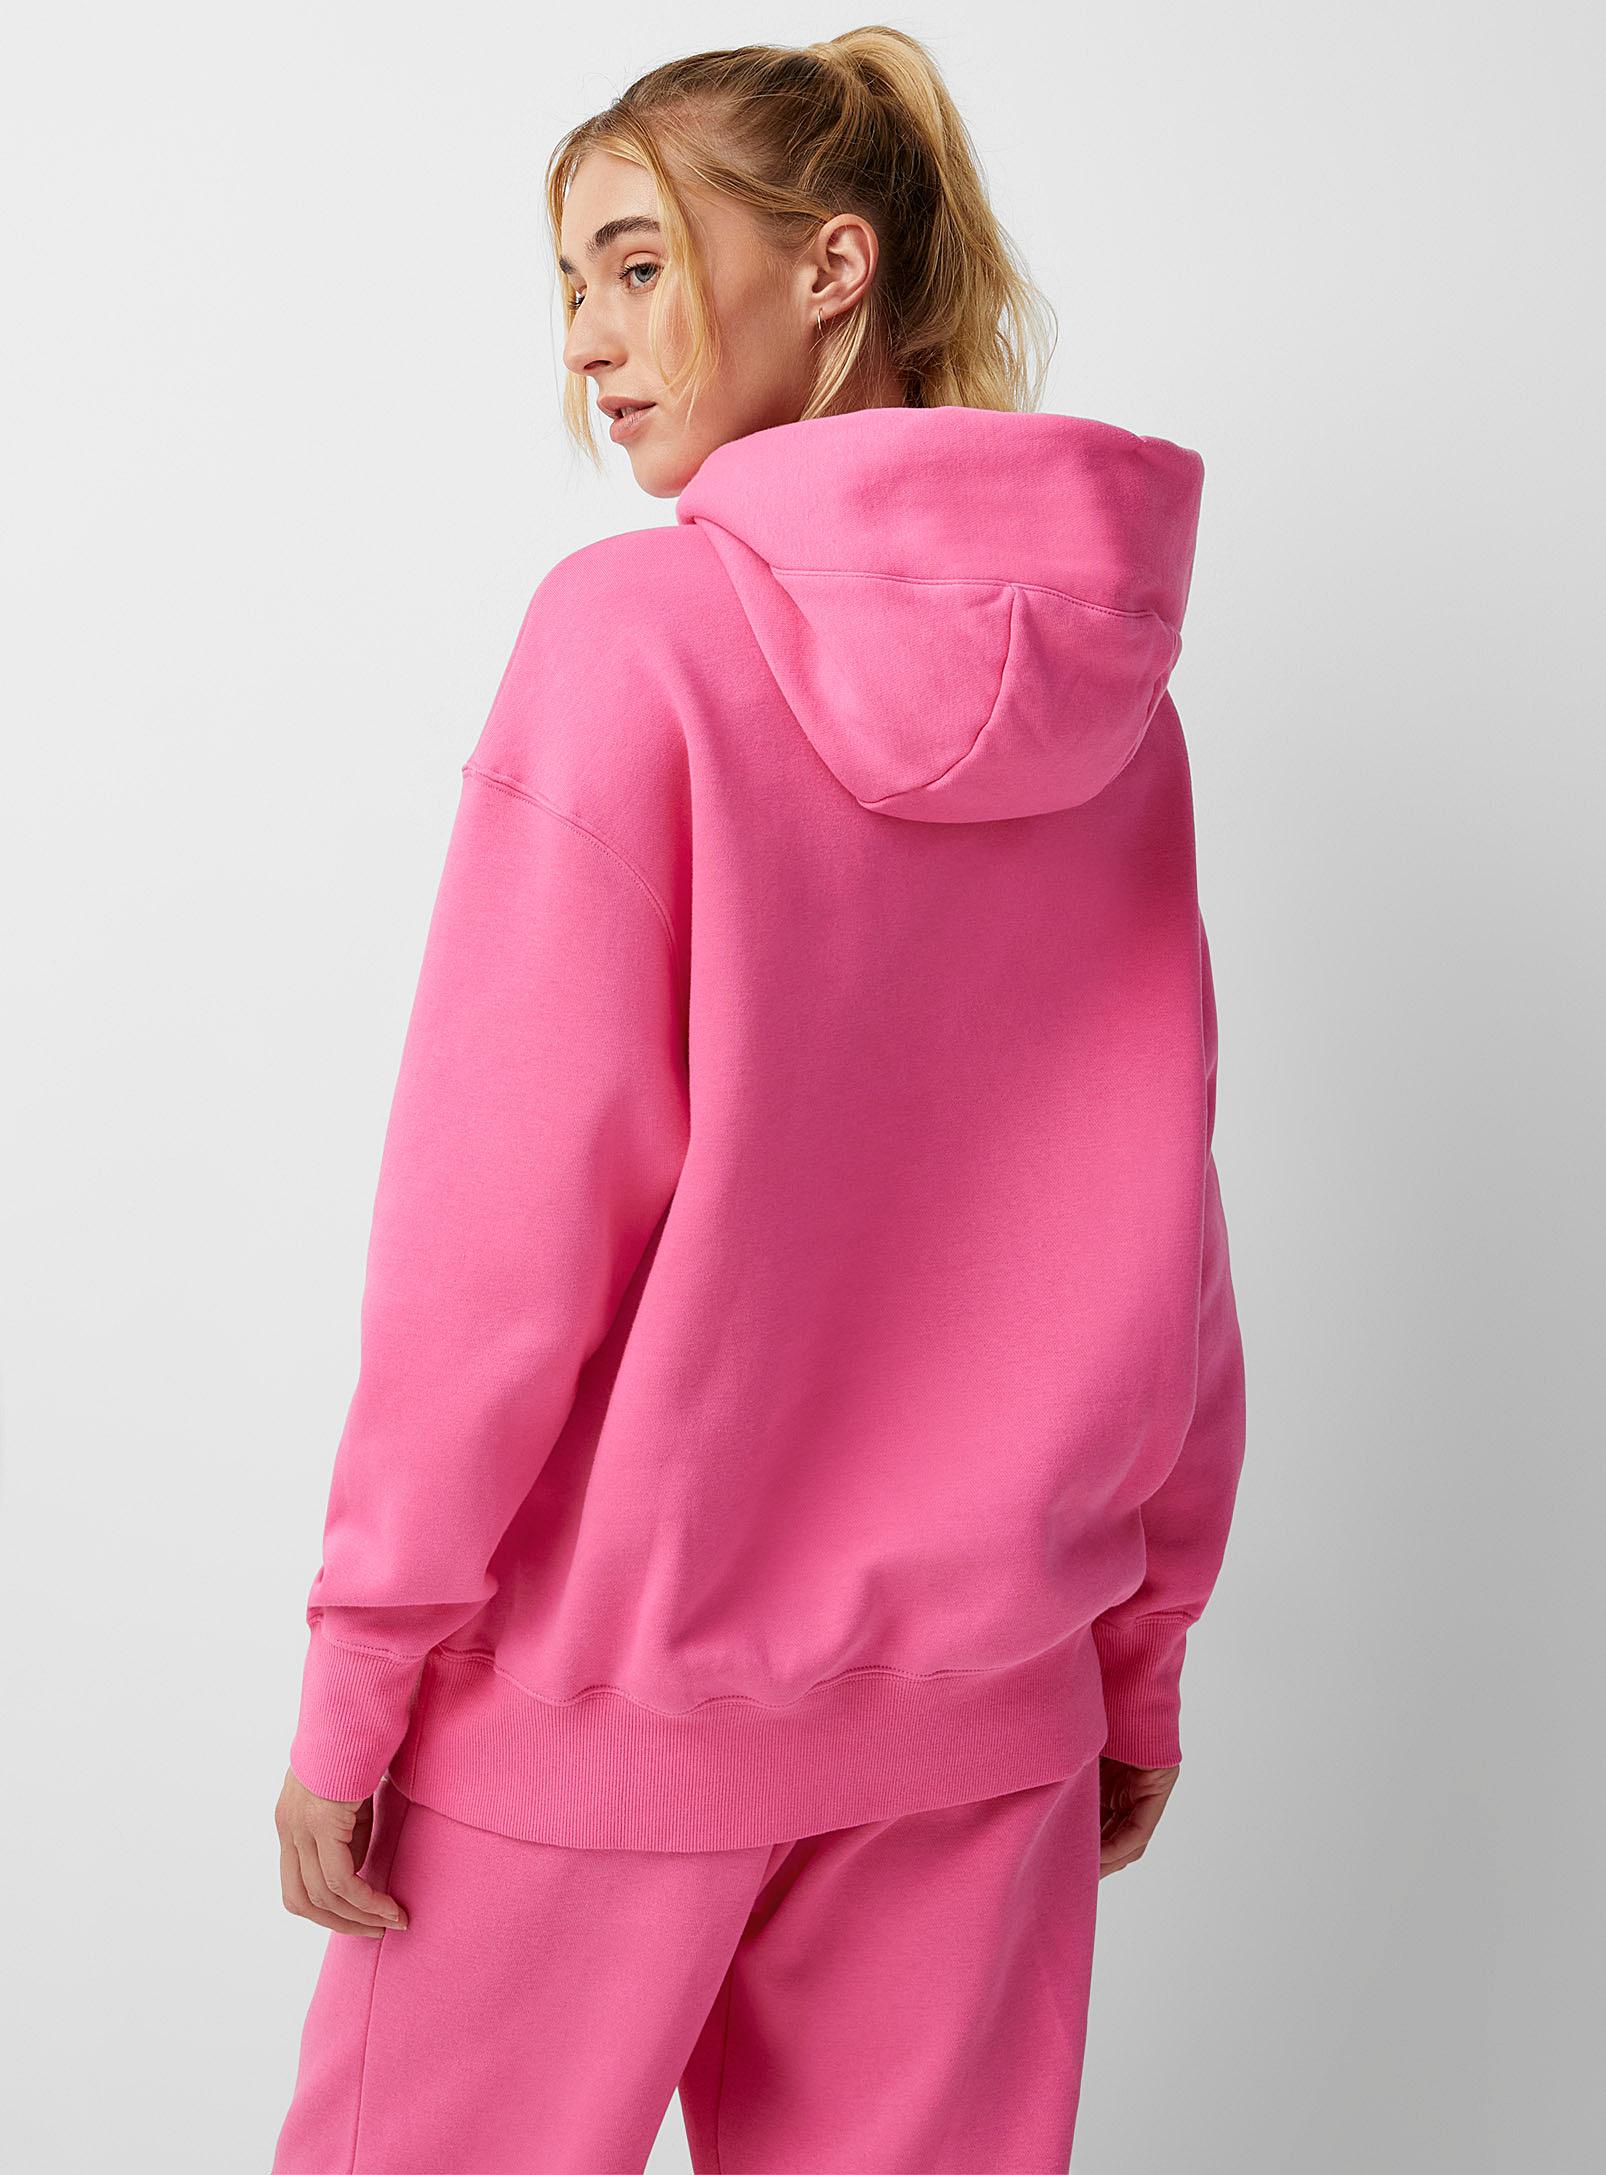 Nike Phoenix Oversized Hoodie in Pink | Lyst